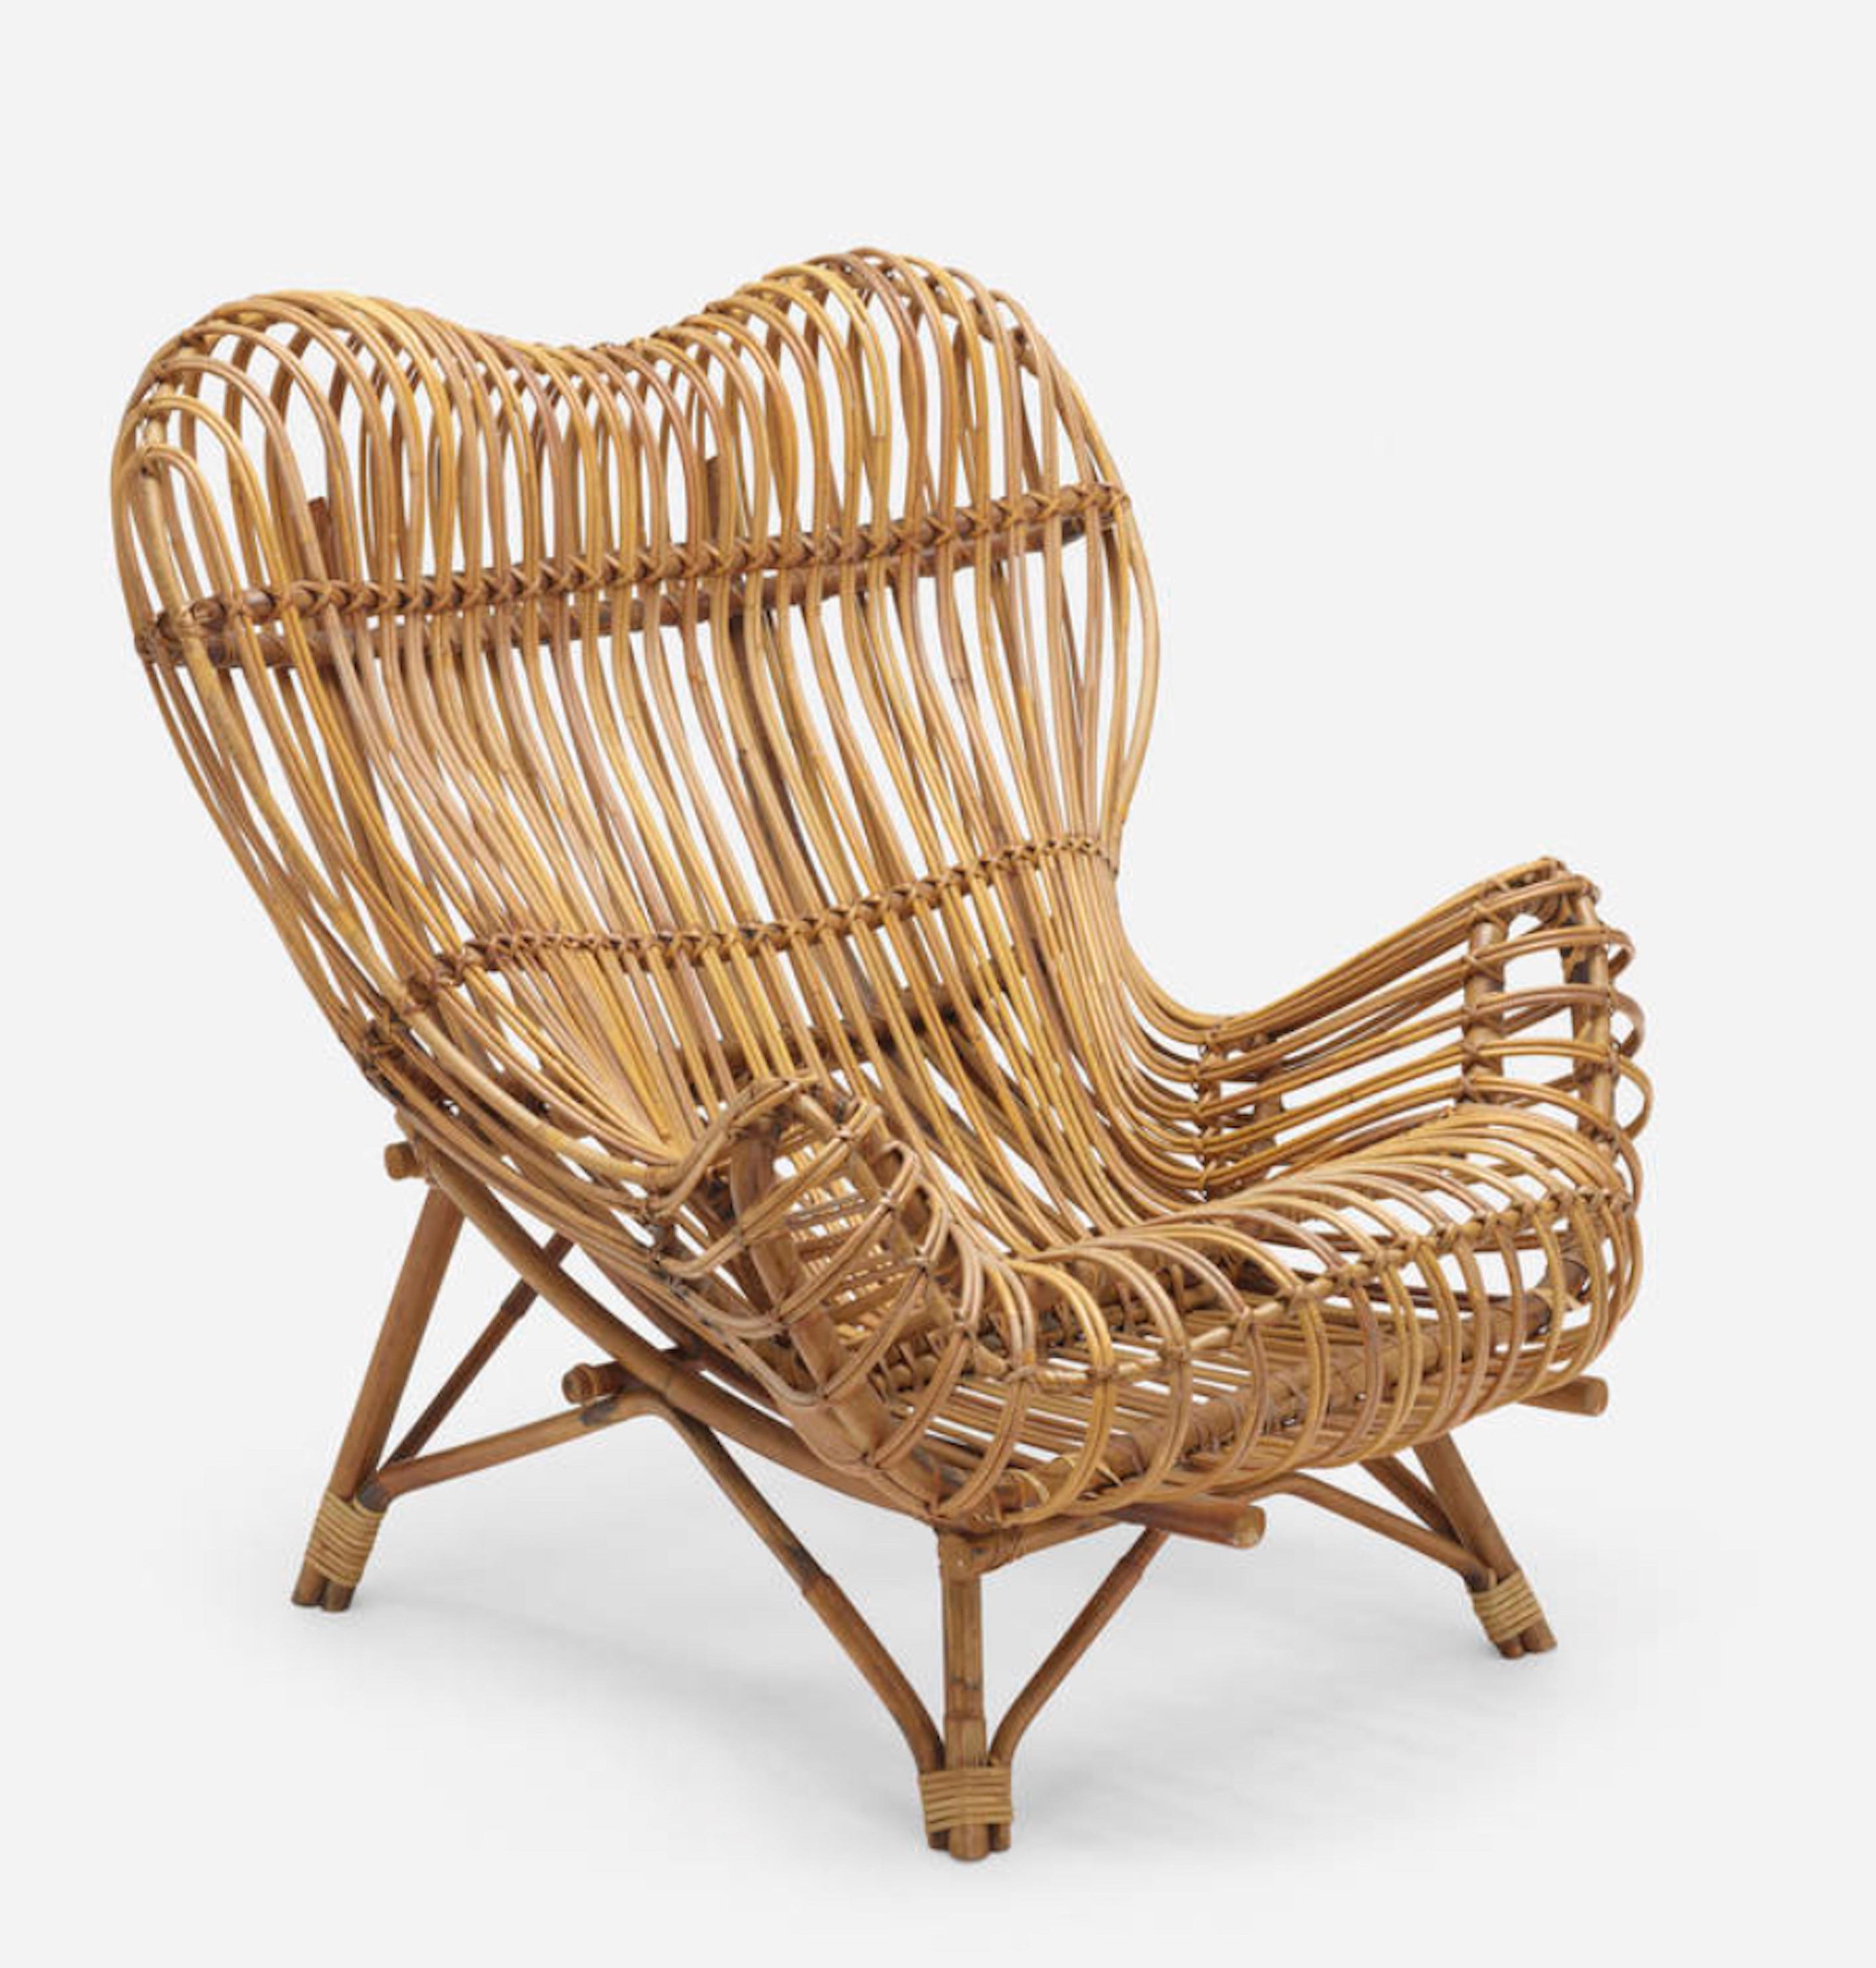 Franco Albini Gala Chair for Bonacina, Italy, 1950

An eye-catching 